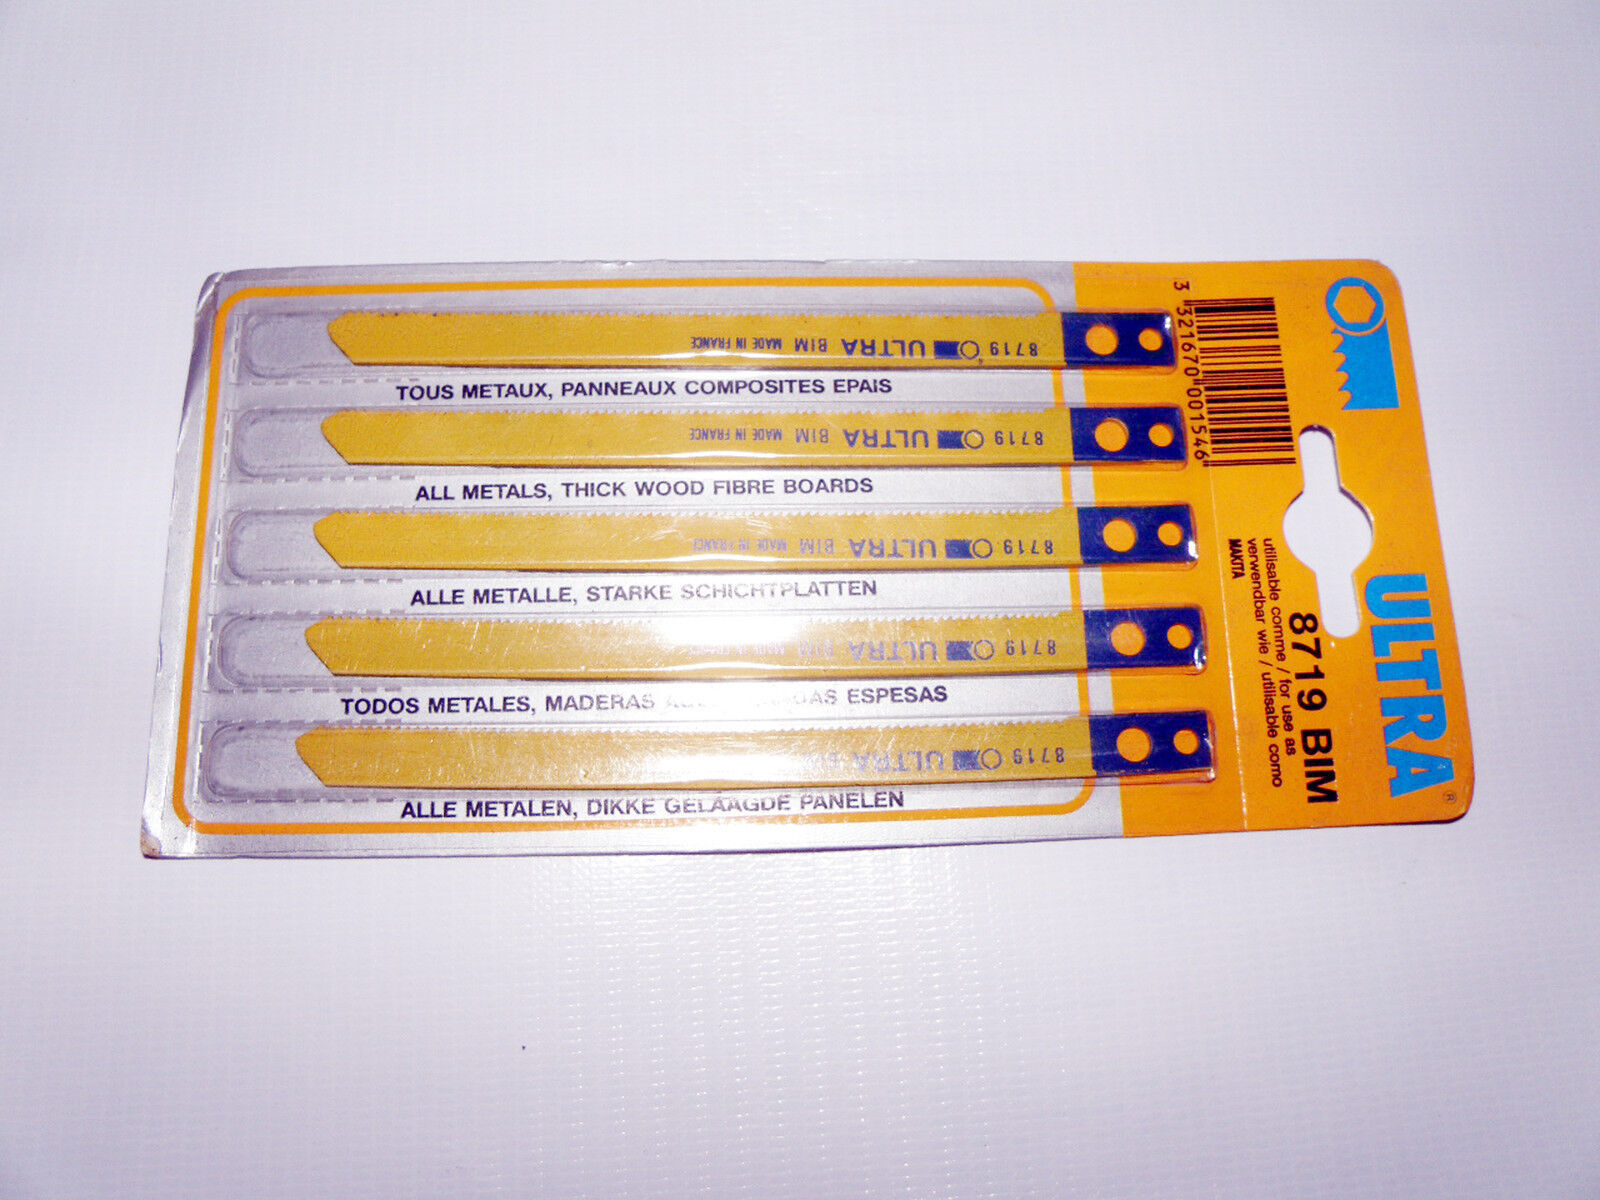 New Ultra 8719 BIM Jigsaw Blades pack of 5 for Makita - $6.82